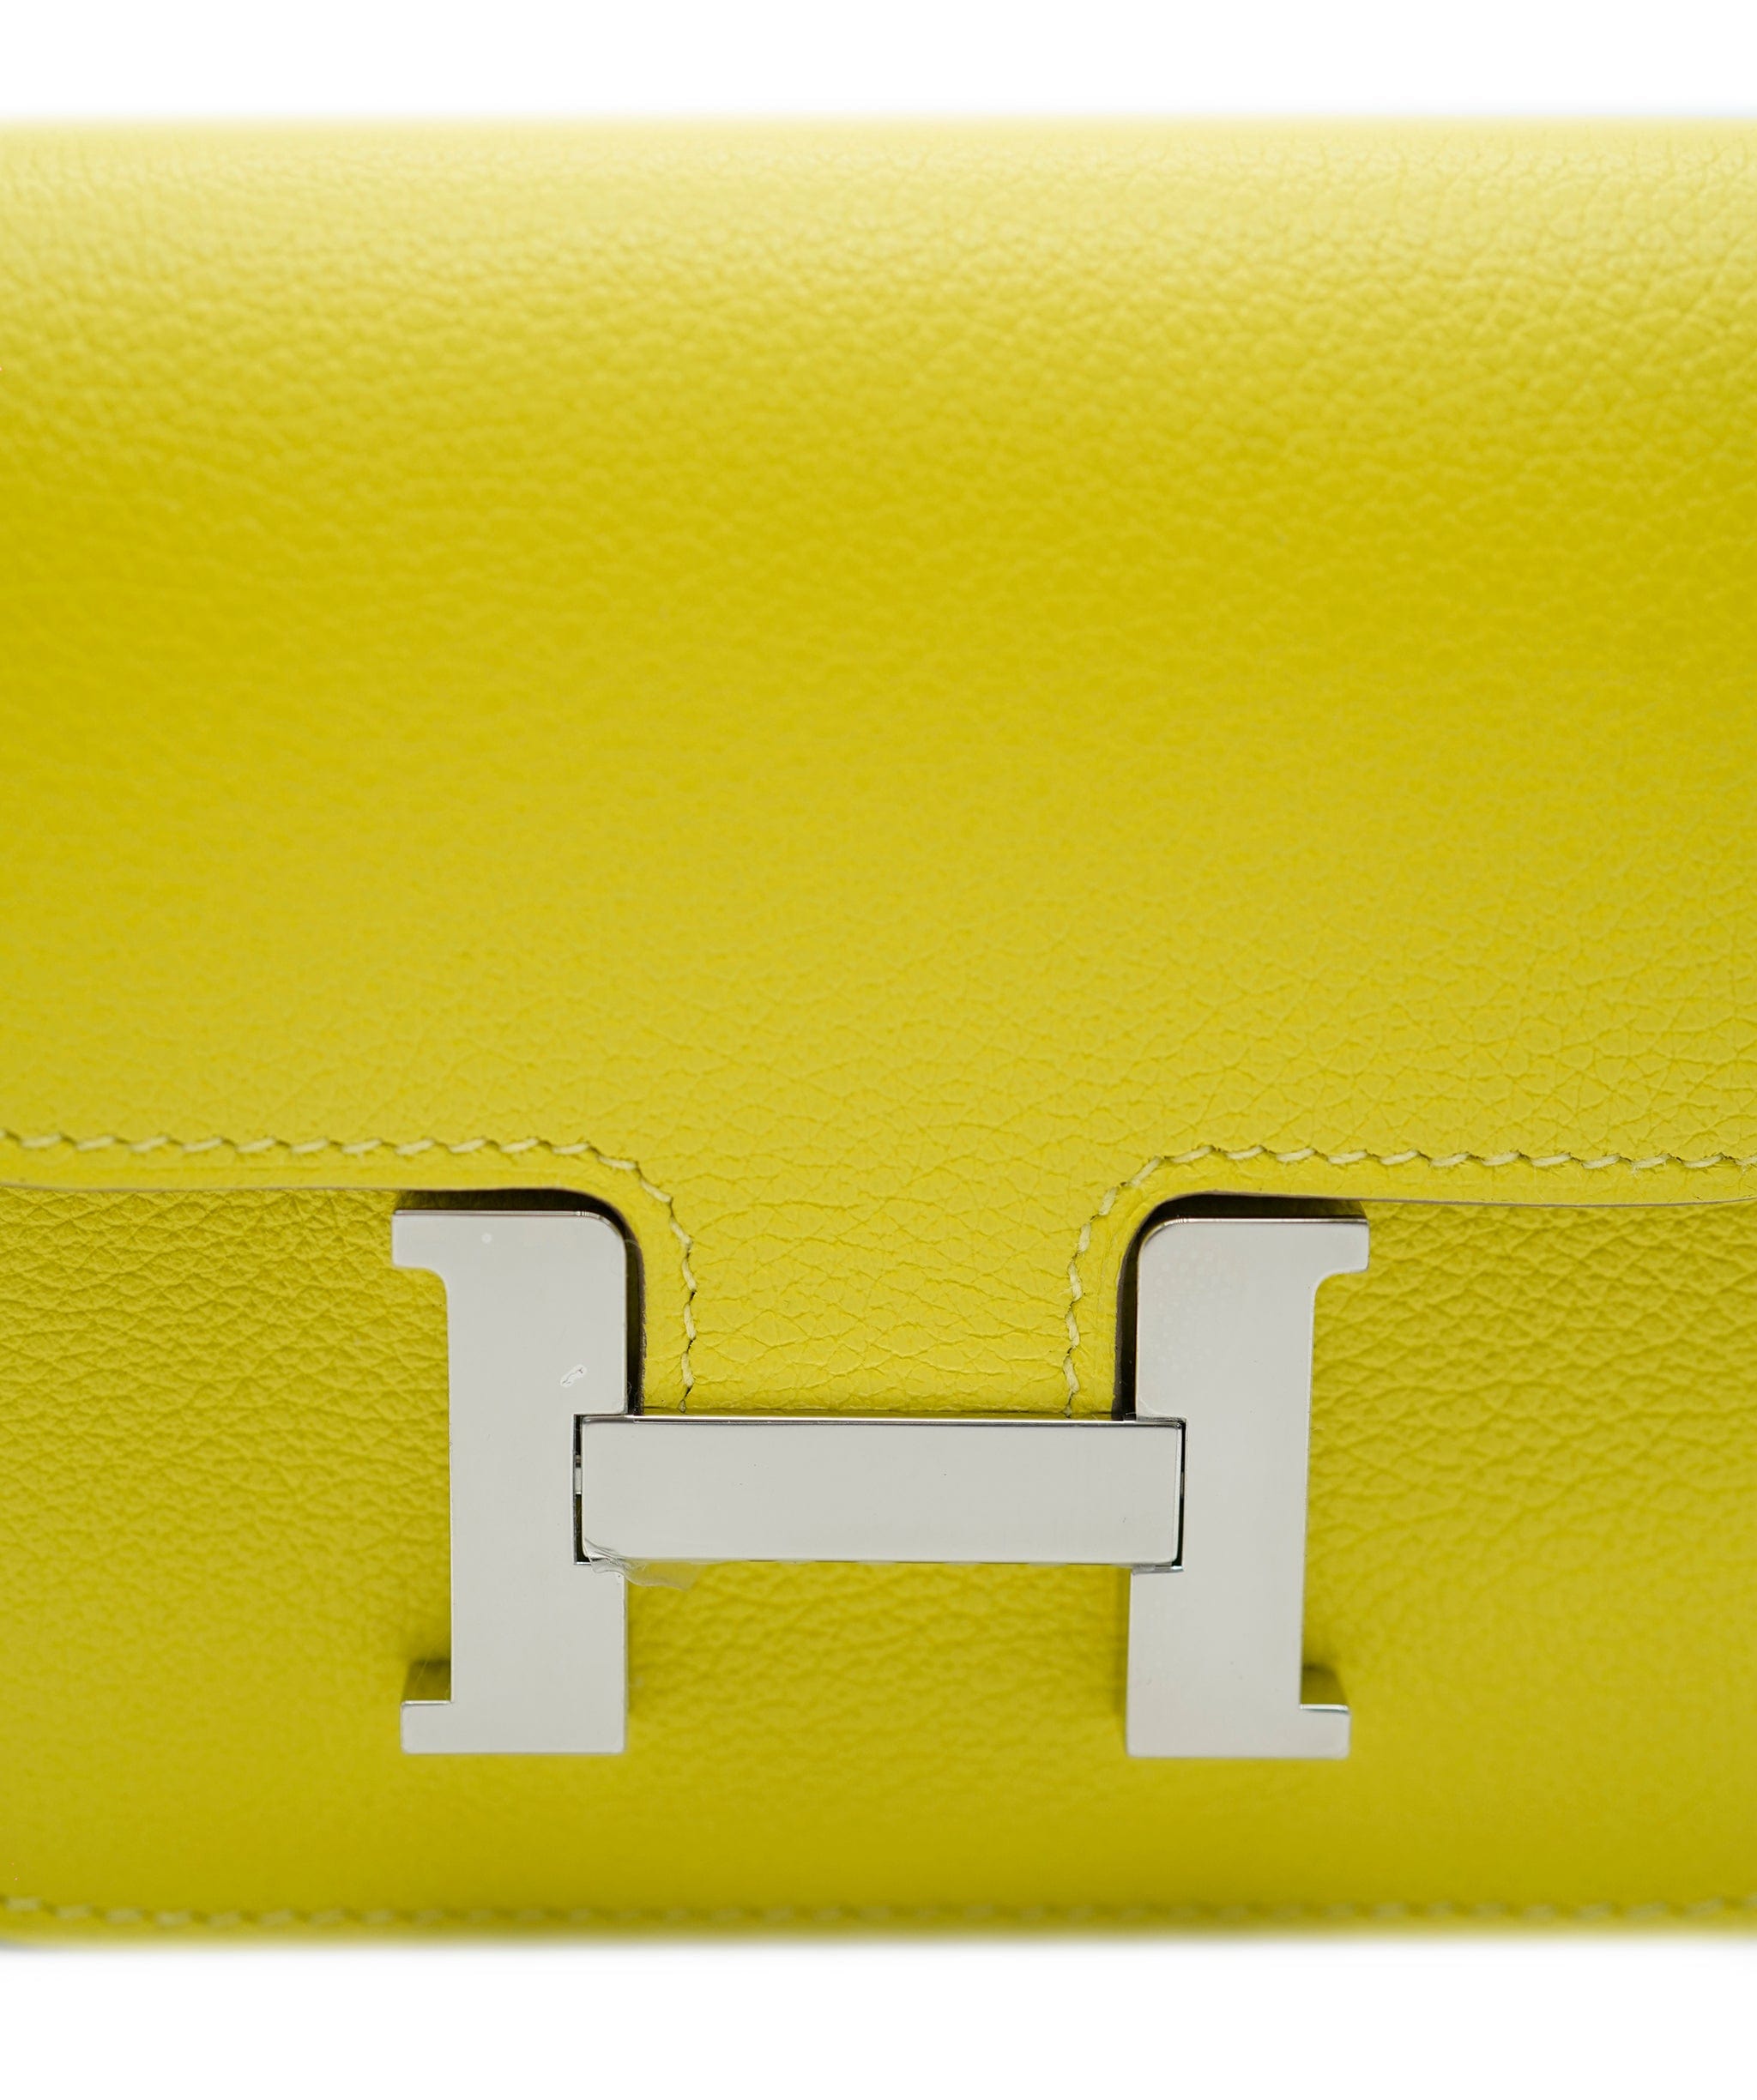 Hermès Hermes yellow constance wallet  - AJC0425